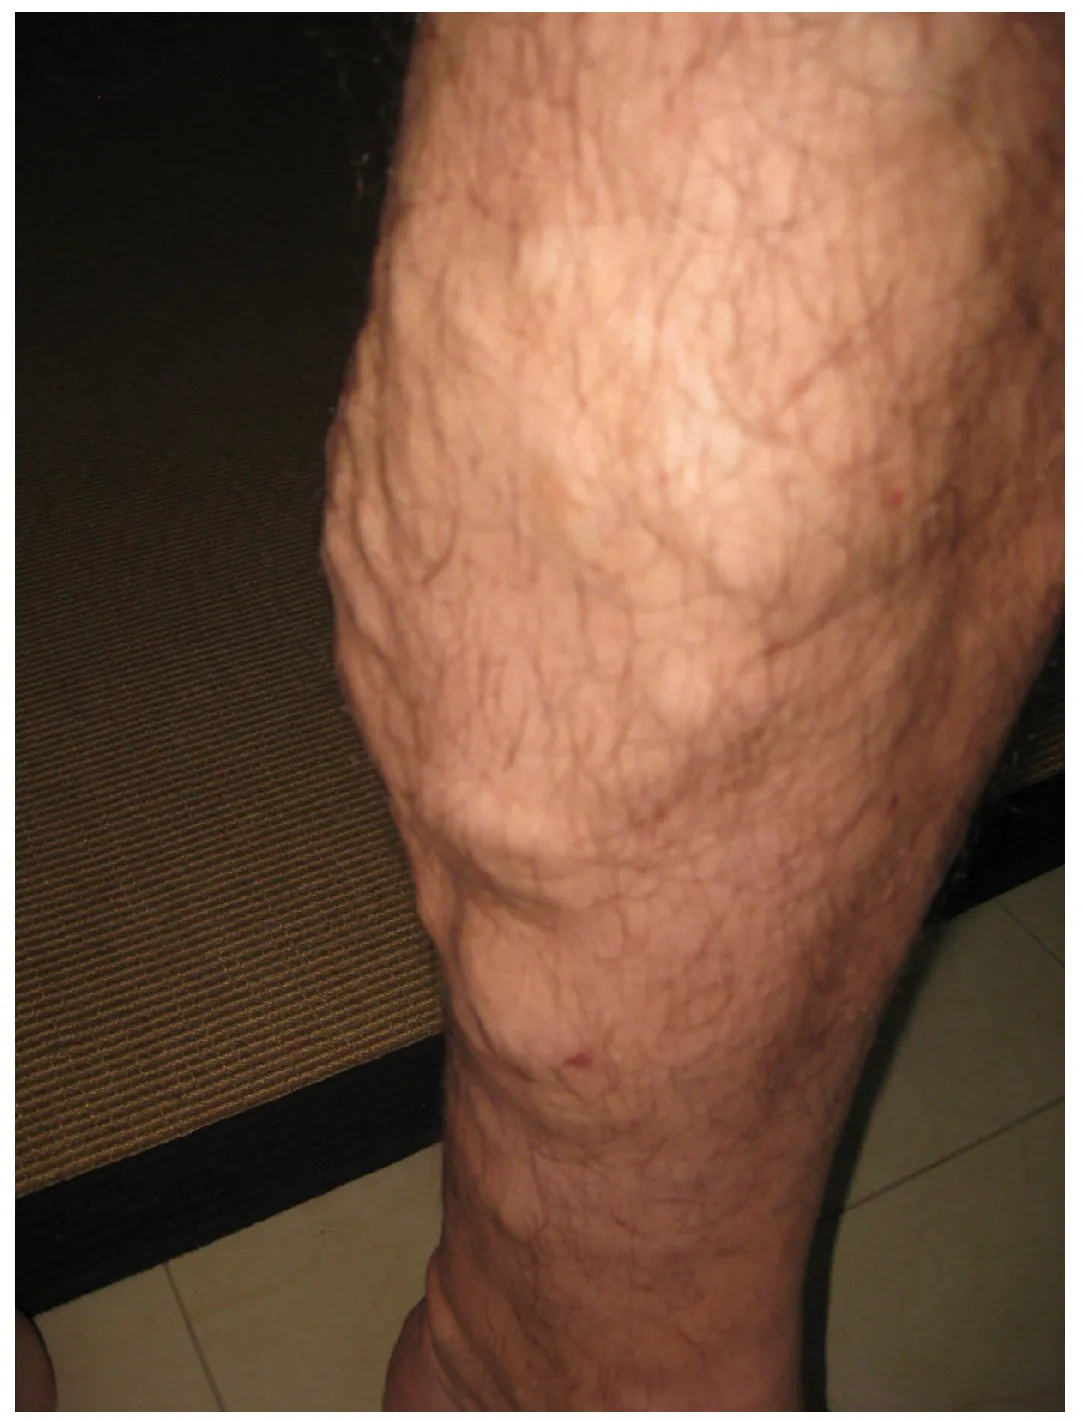 This photo shows a person’s leg.